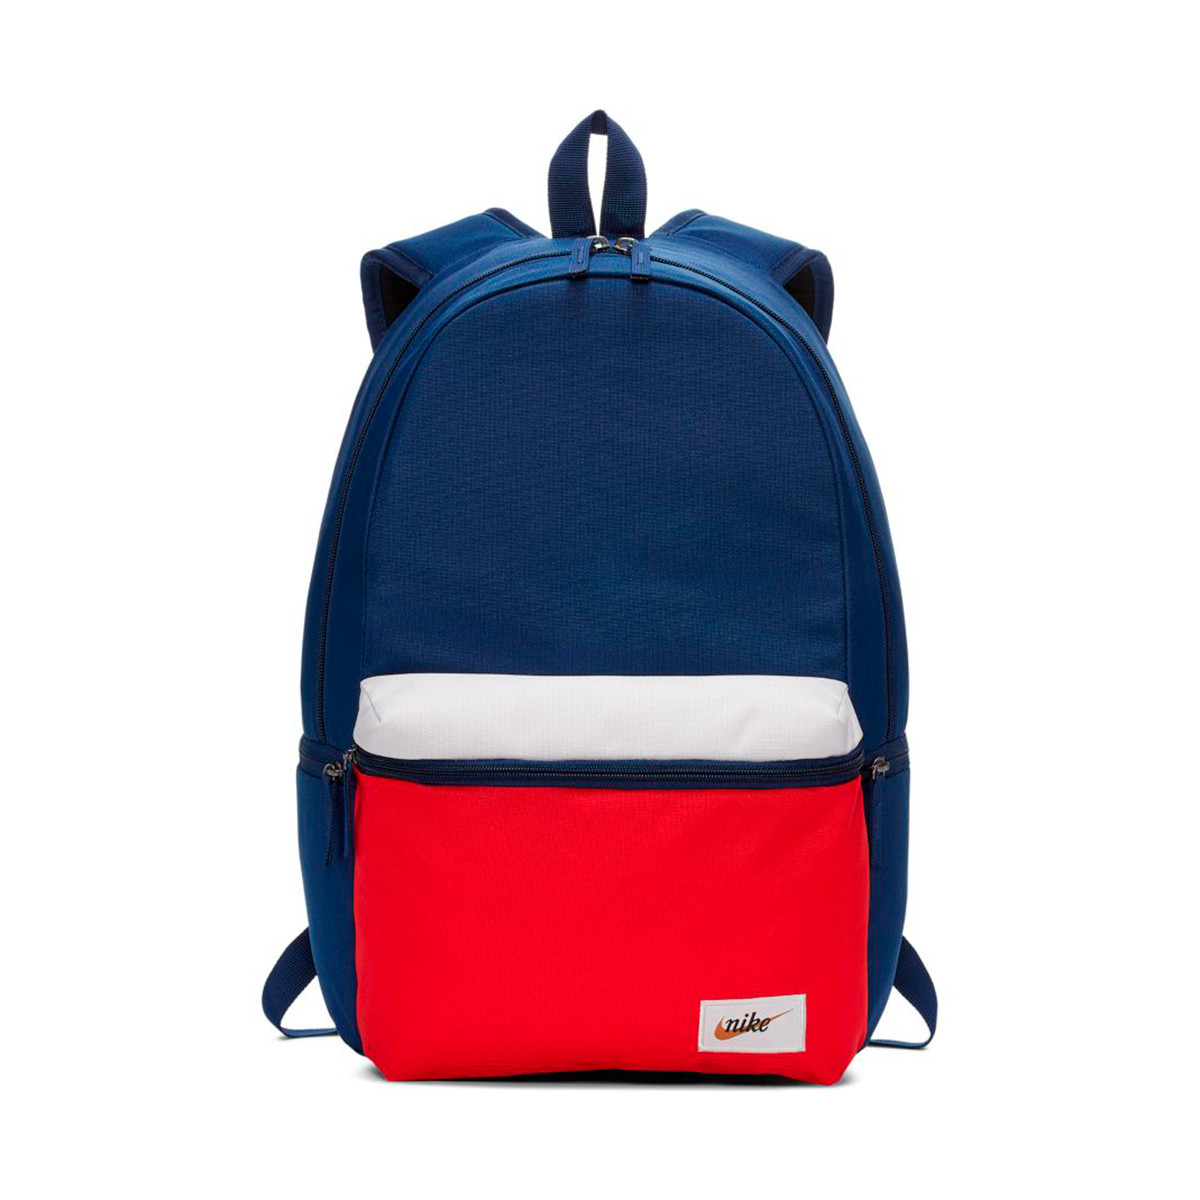 nike heritage backpack blue